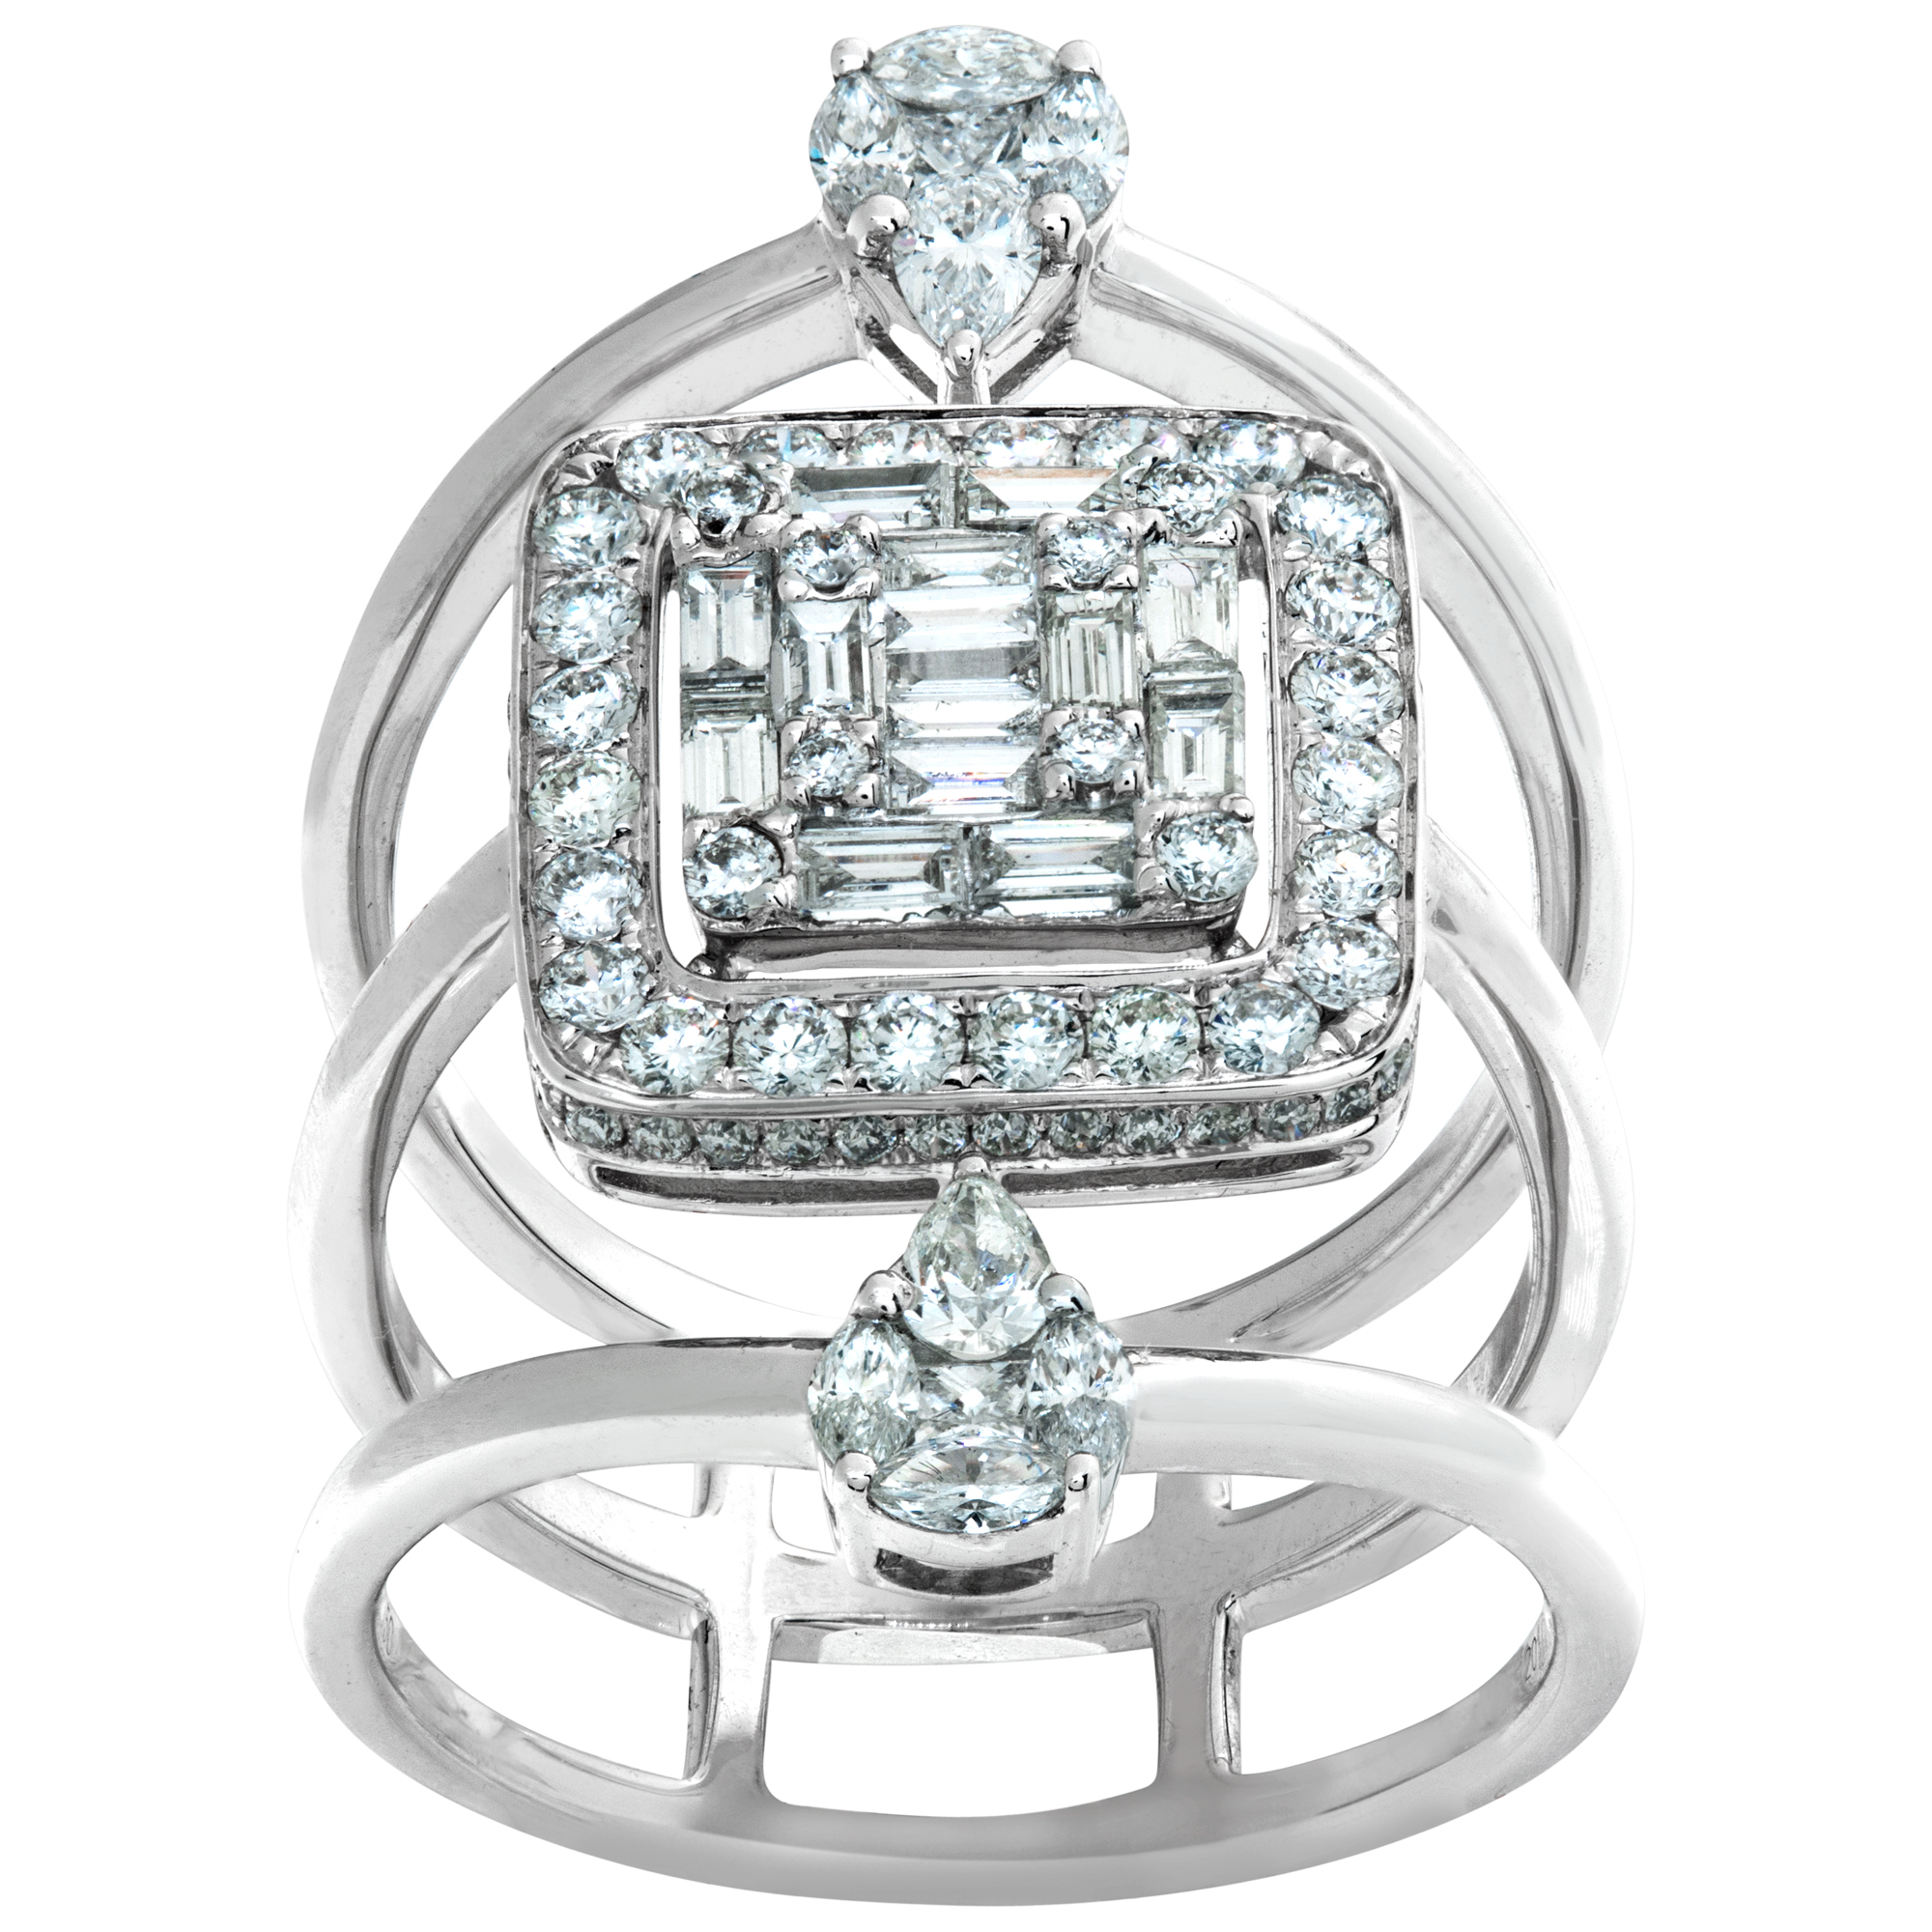 Stunning 18k white gold three band illusion set diamond ring with 1.63 carats